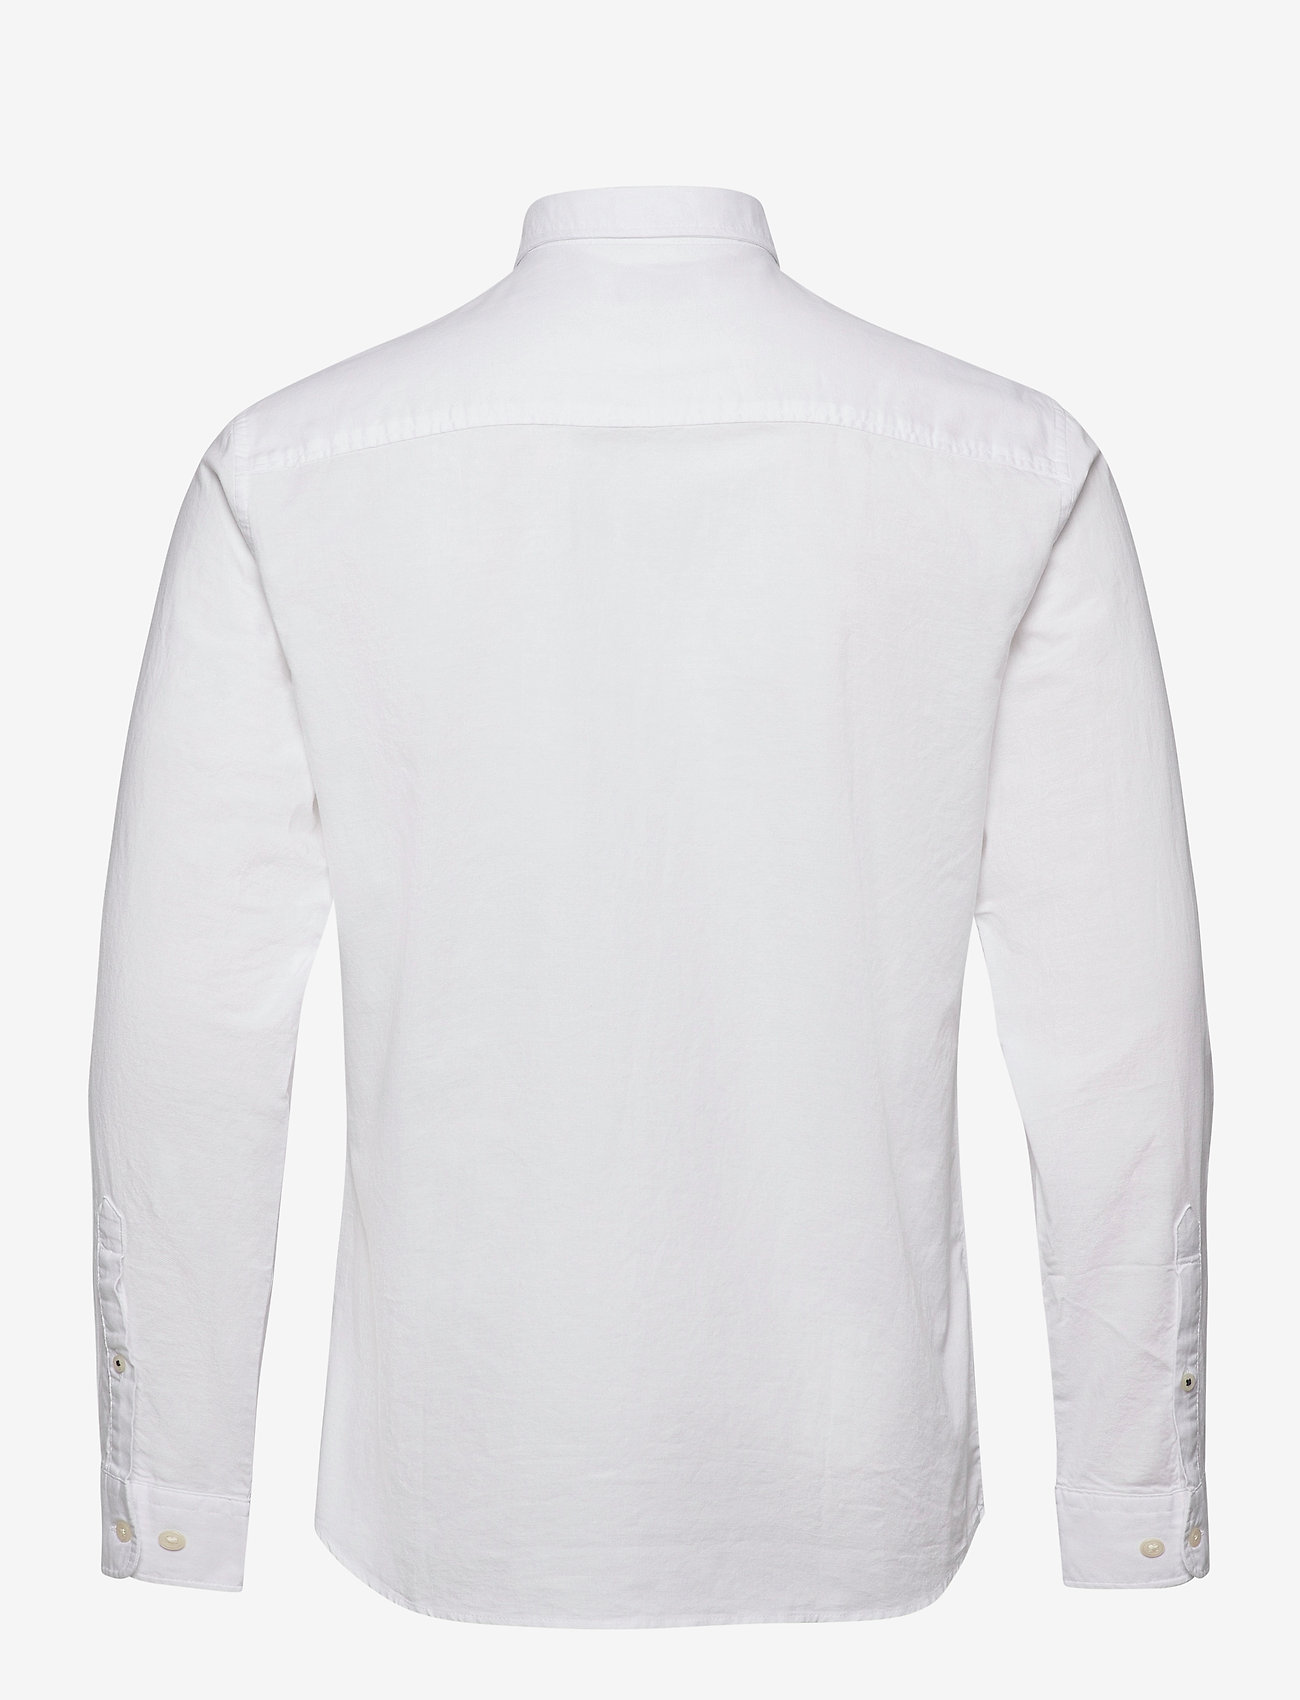 Jack & Jones - JJEOXFORD SHIRT LS NOOS - oxford shirts - white - 1